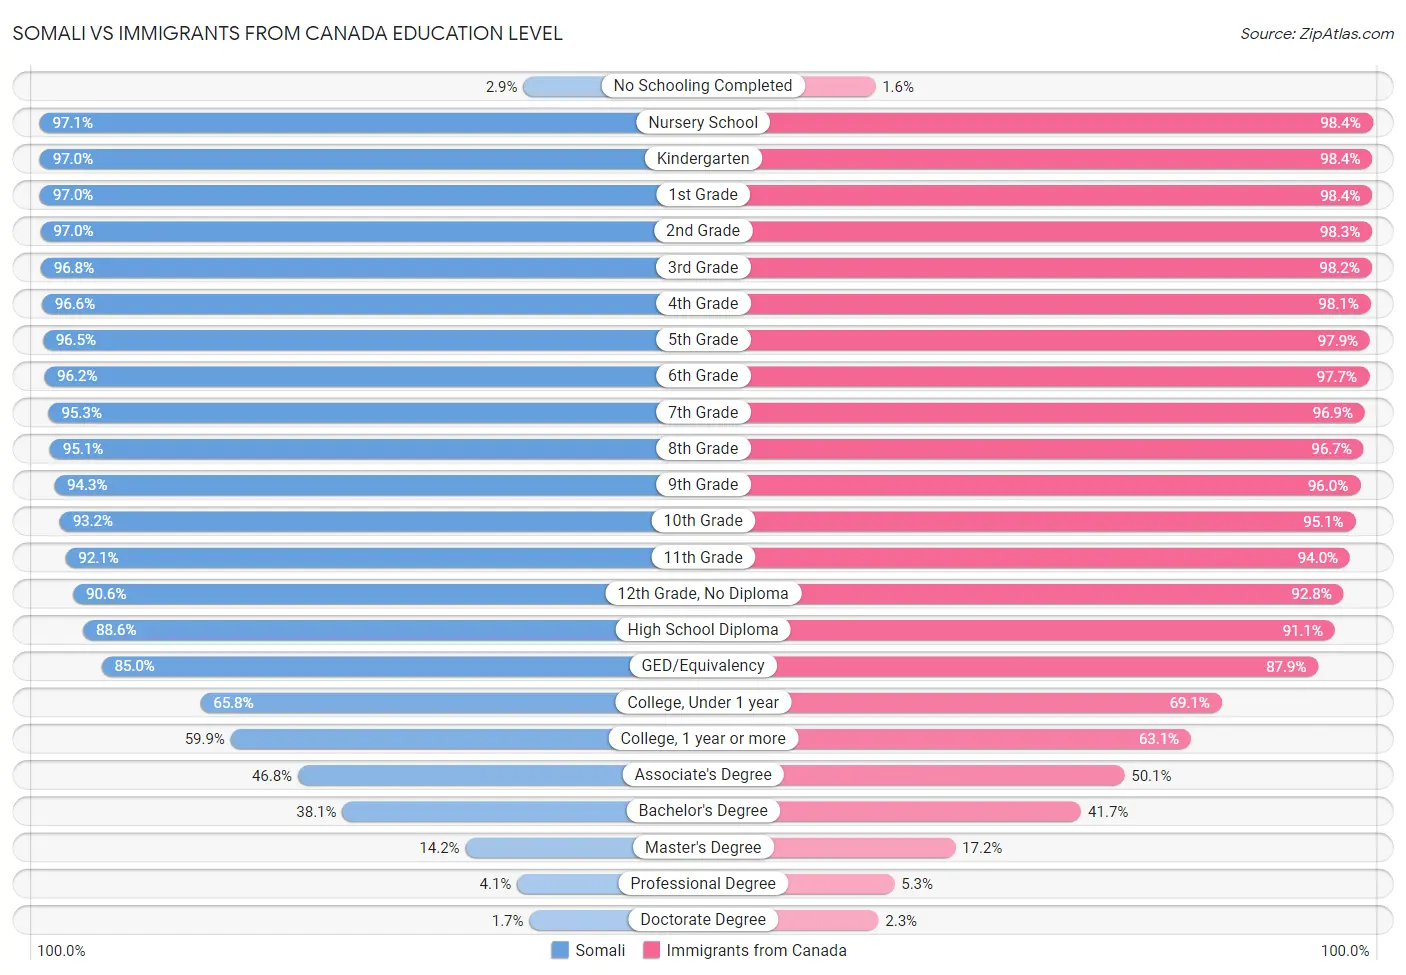 Somali vs Immigrants from Canada Education Level